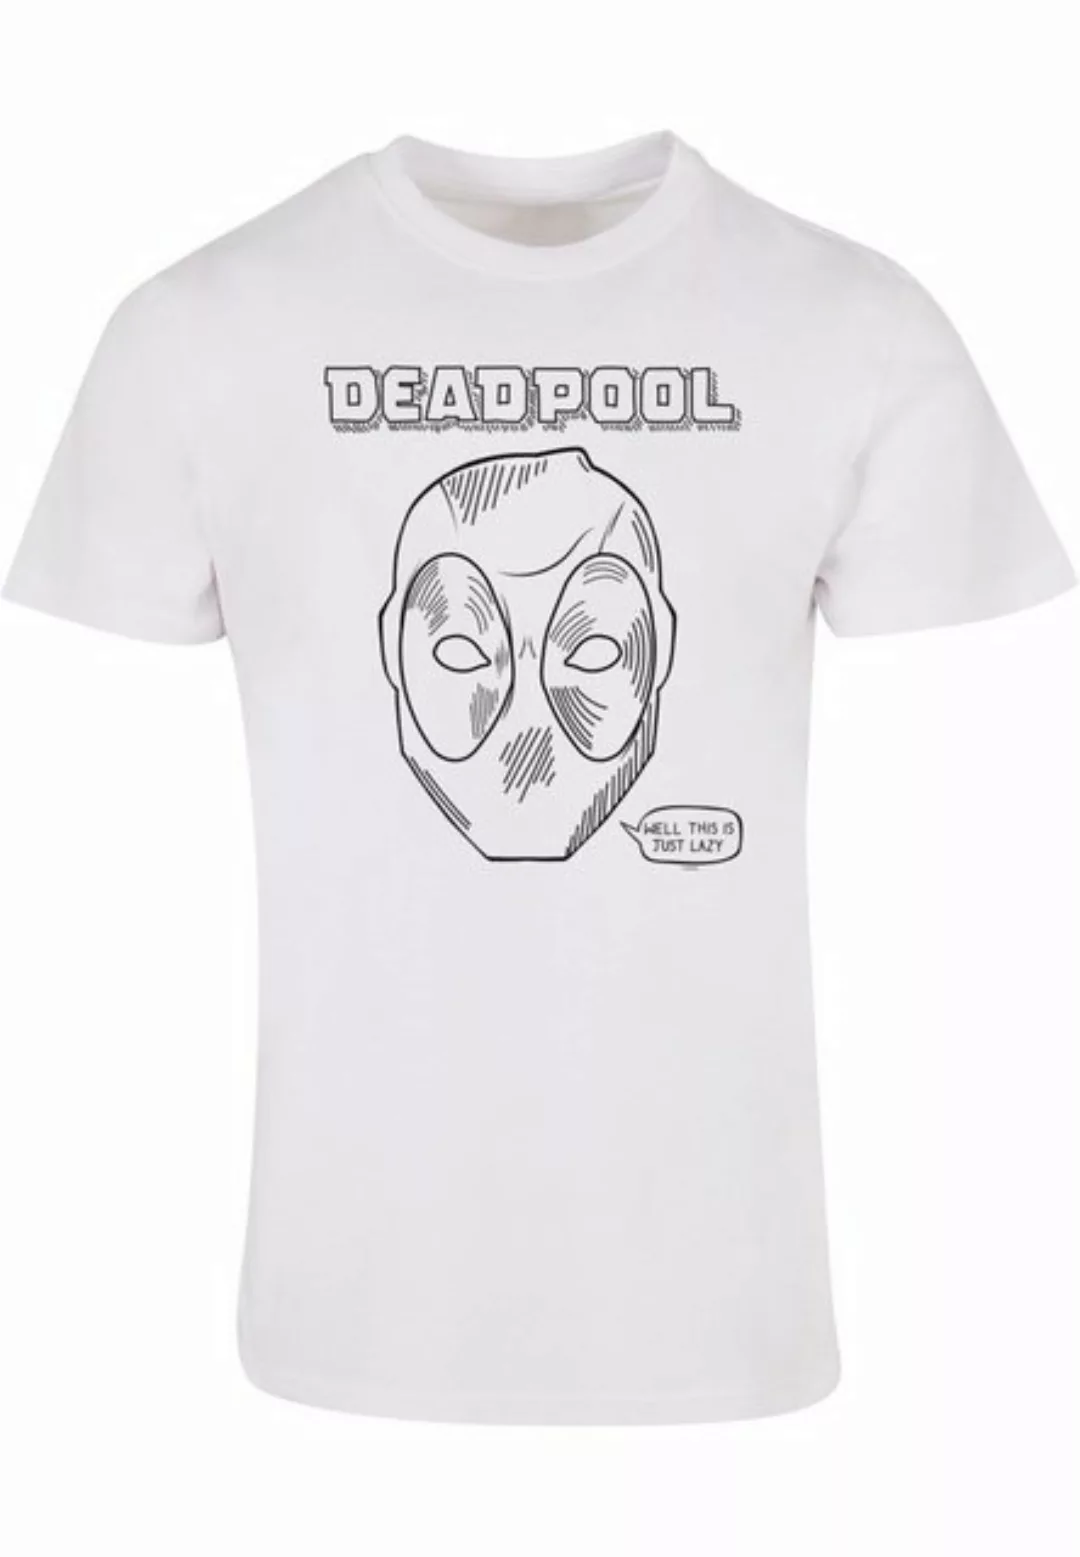 ABSOLUTE CULT T-Shirt ABSOLUTE CULT Herren Deadpool - This Is Just Lazy T-S günstig online kaufen